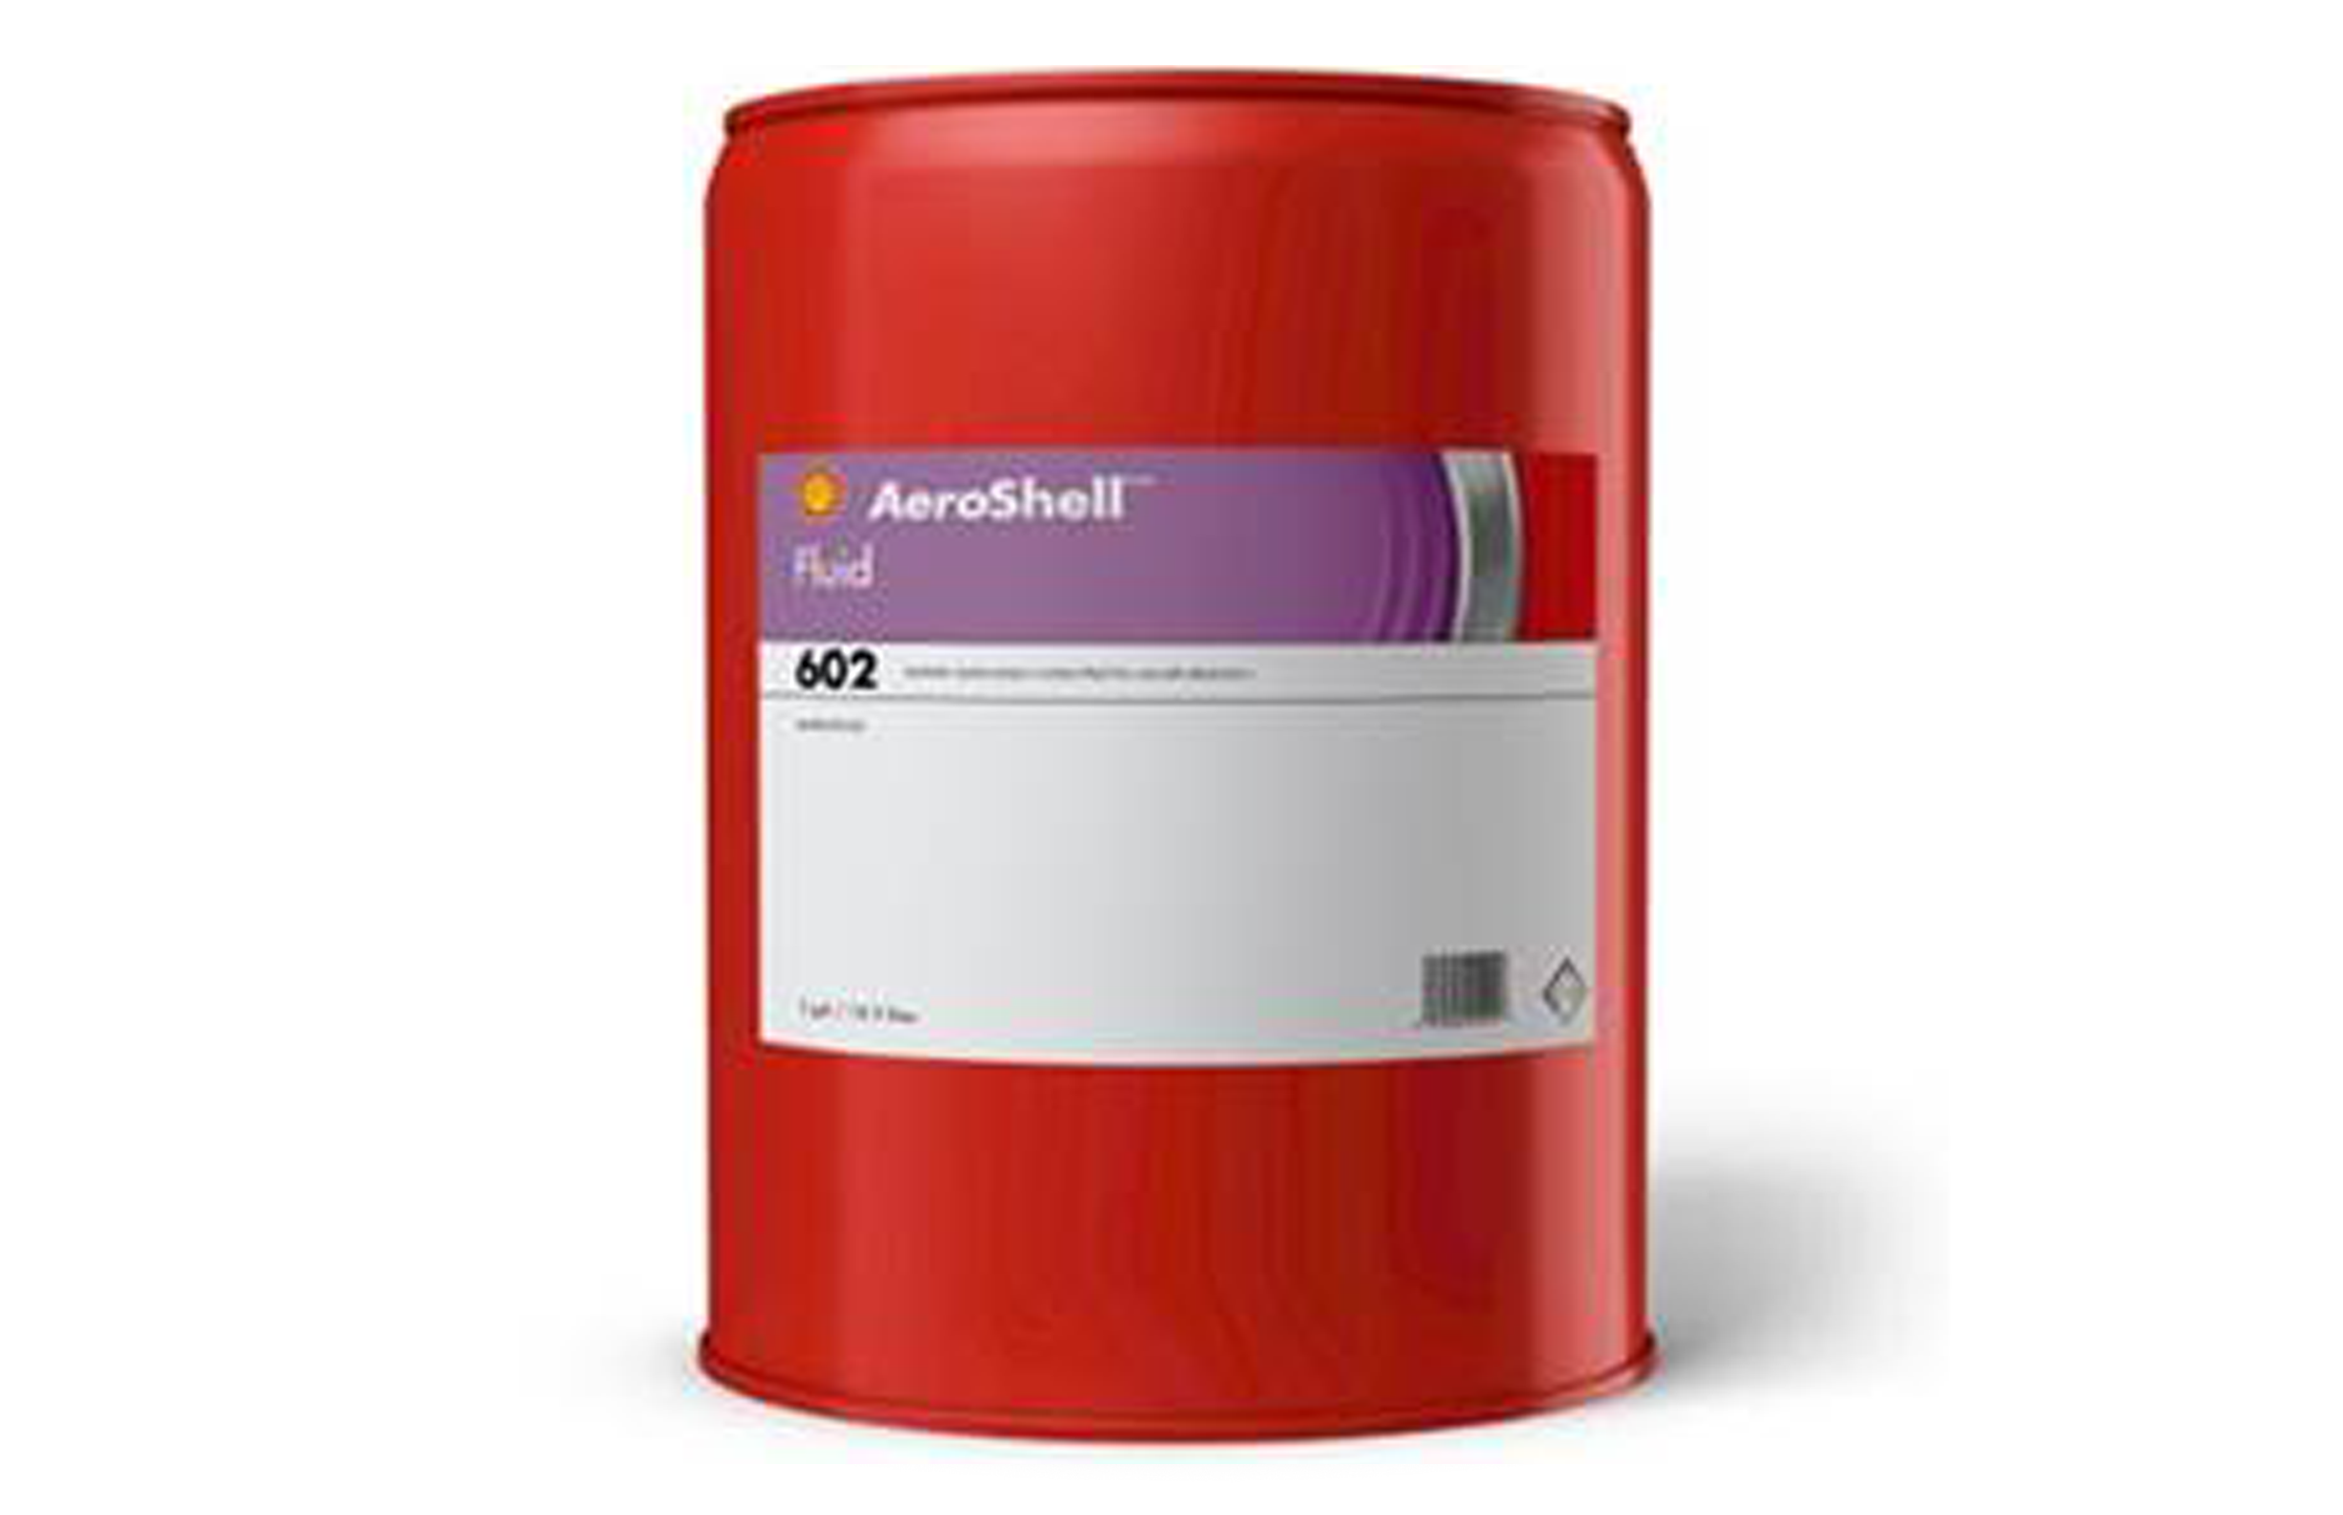 Aeroshell 602 drum